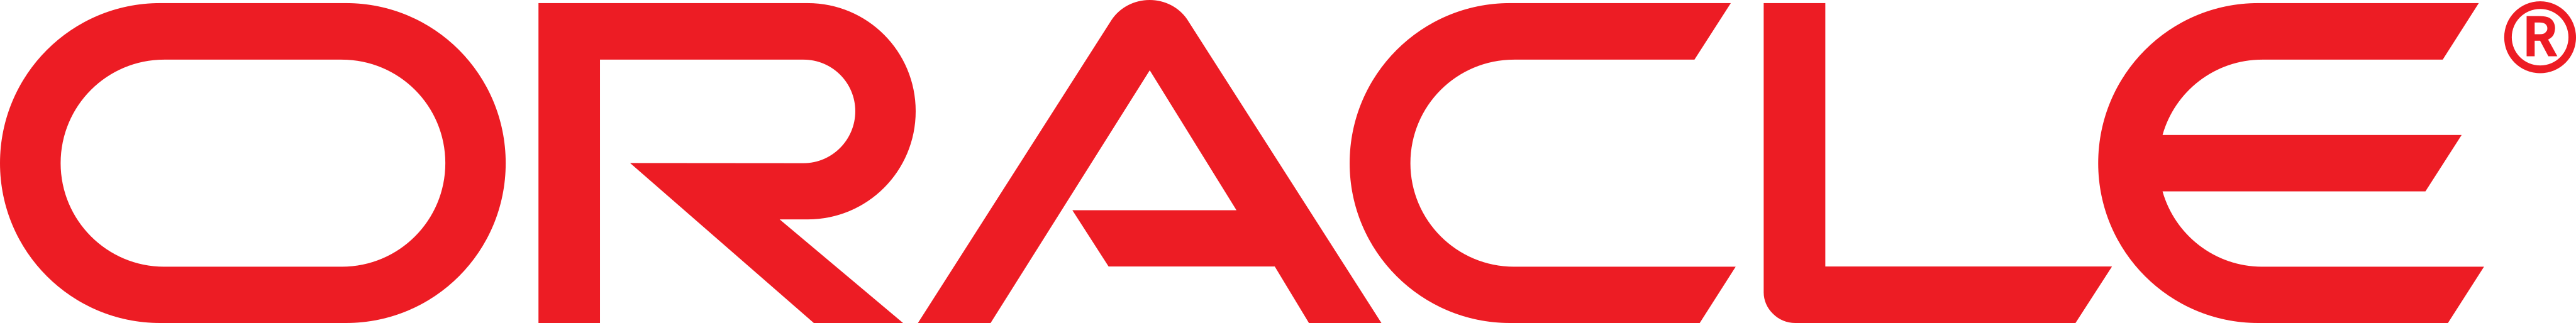 oracle logo 1 2 - Oracle Logo